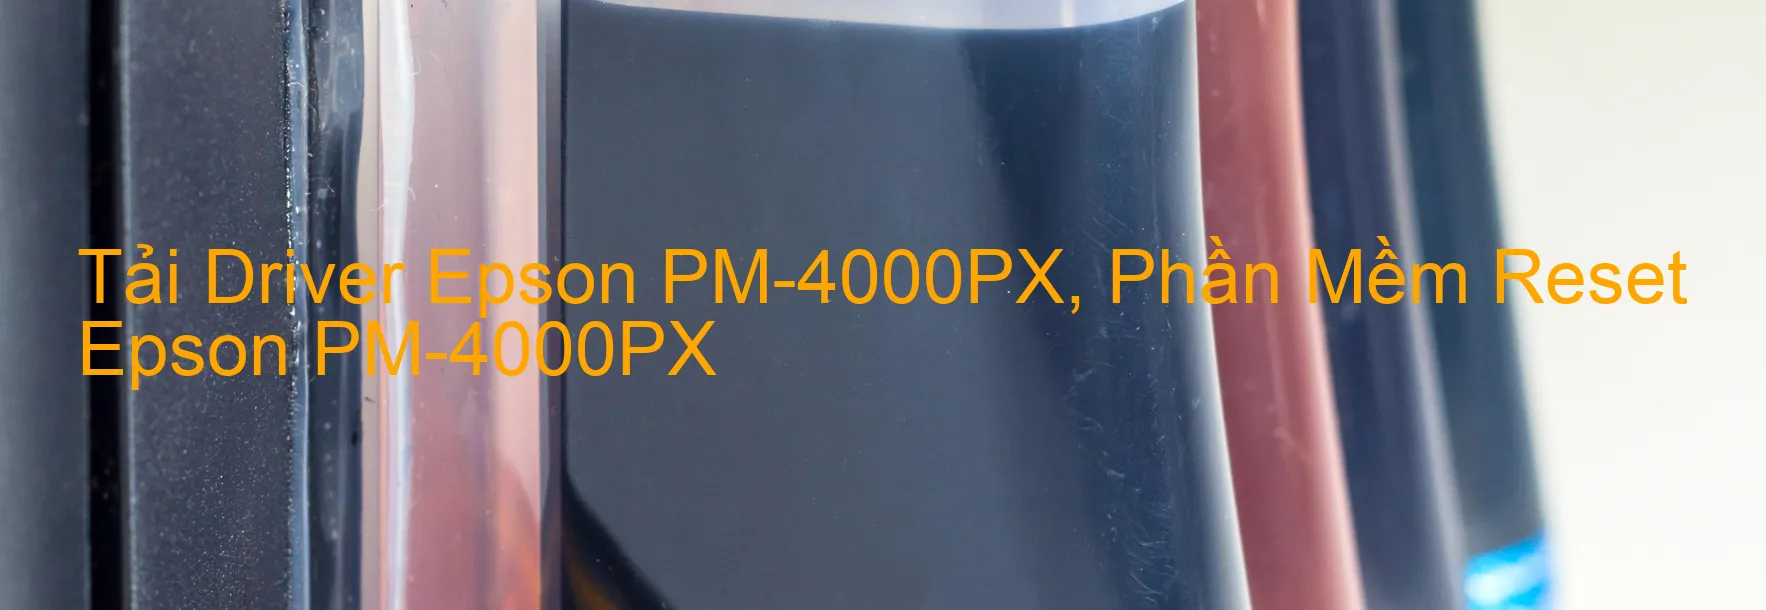 Driver Epson PM-4000PX, Phần Mềm Reset Epson PM-4000PX